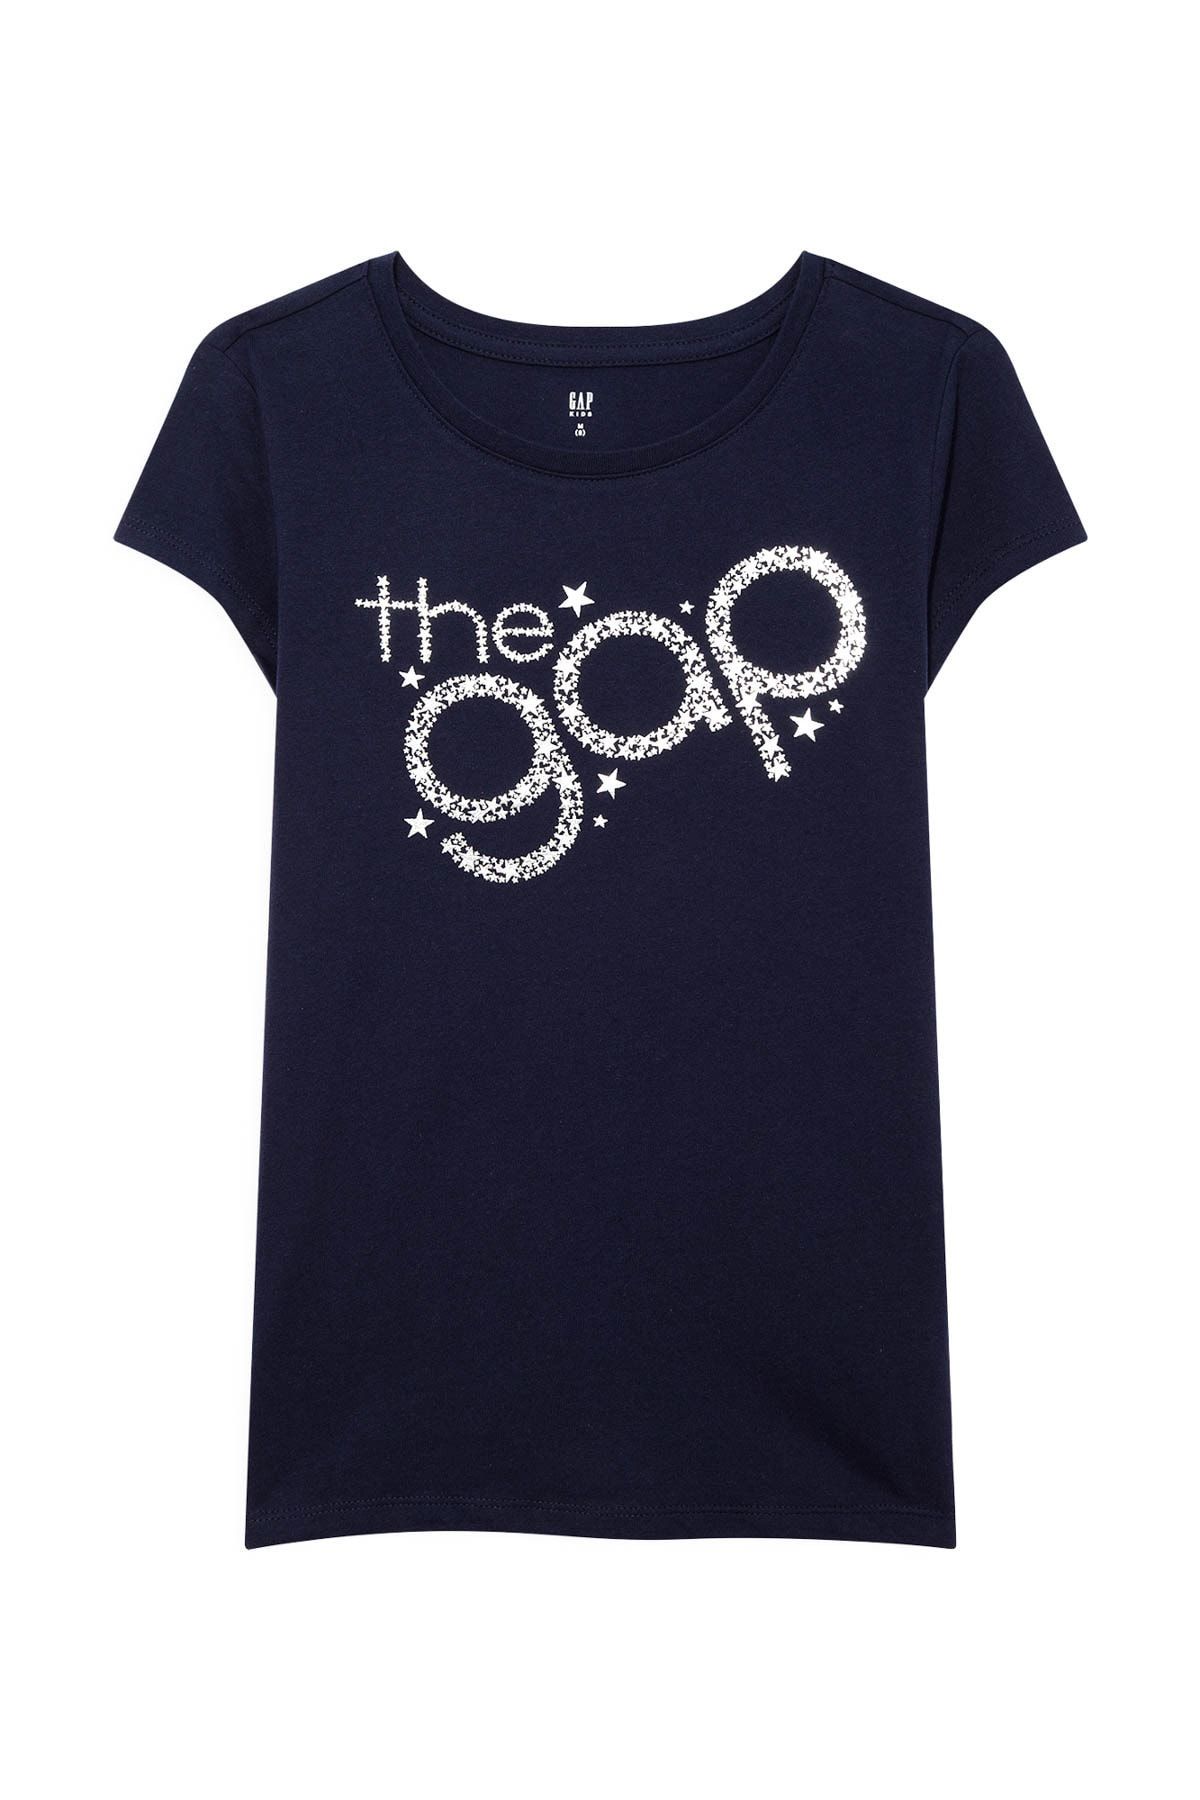 GAP Kız Çocuk Grafik Kısa Kollu T-Shirt